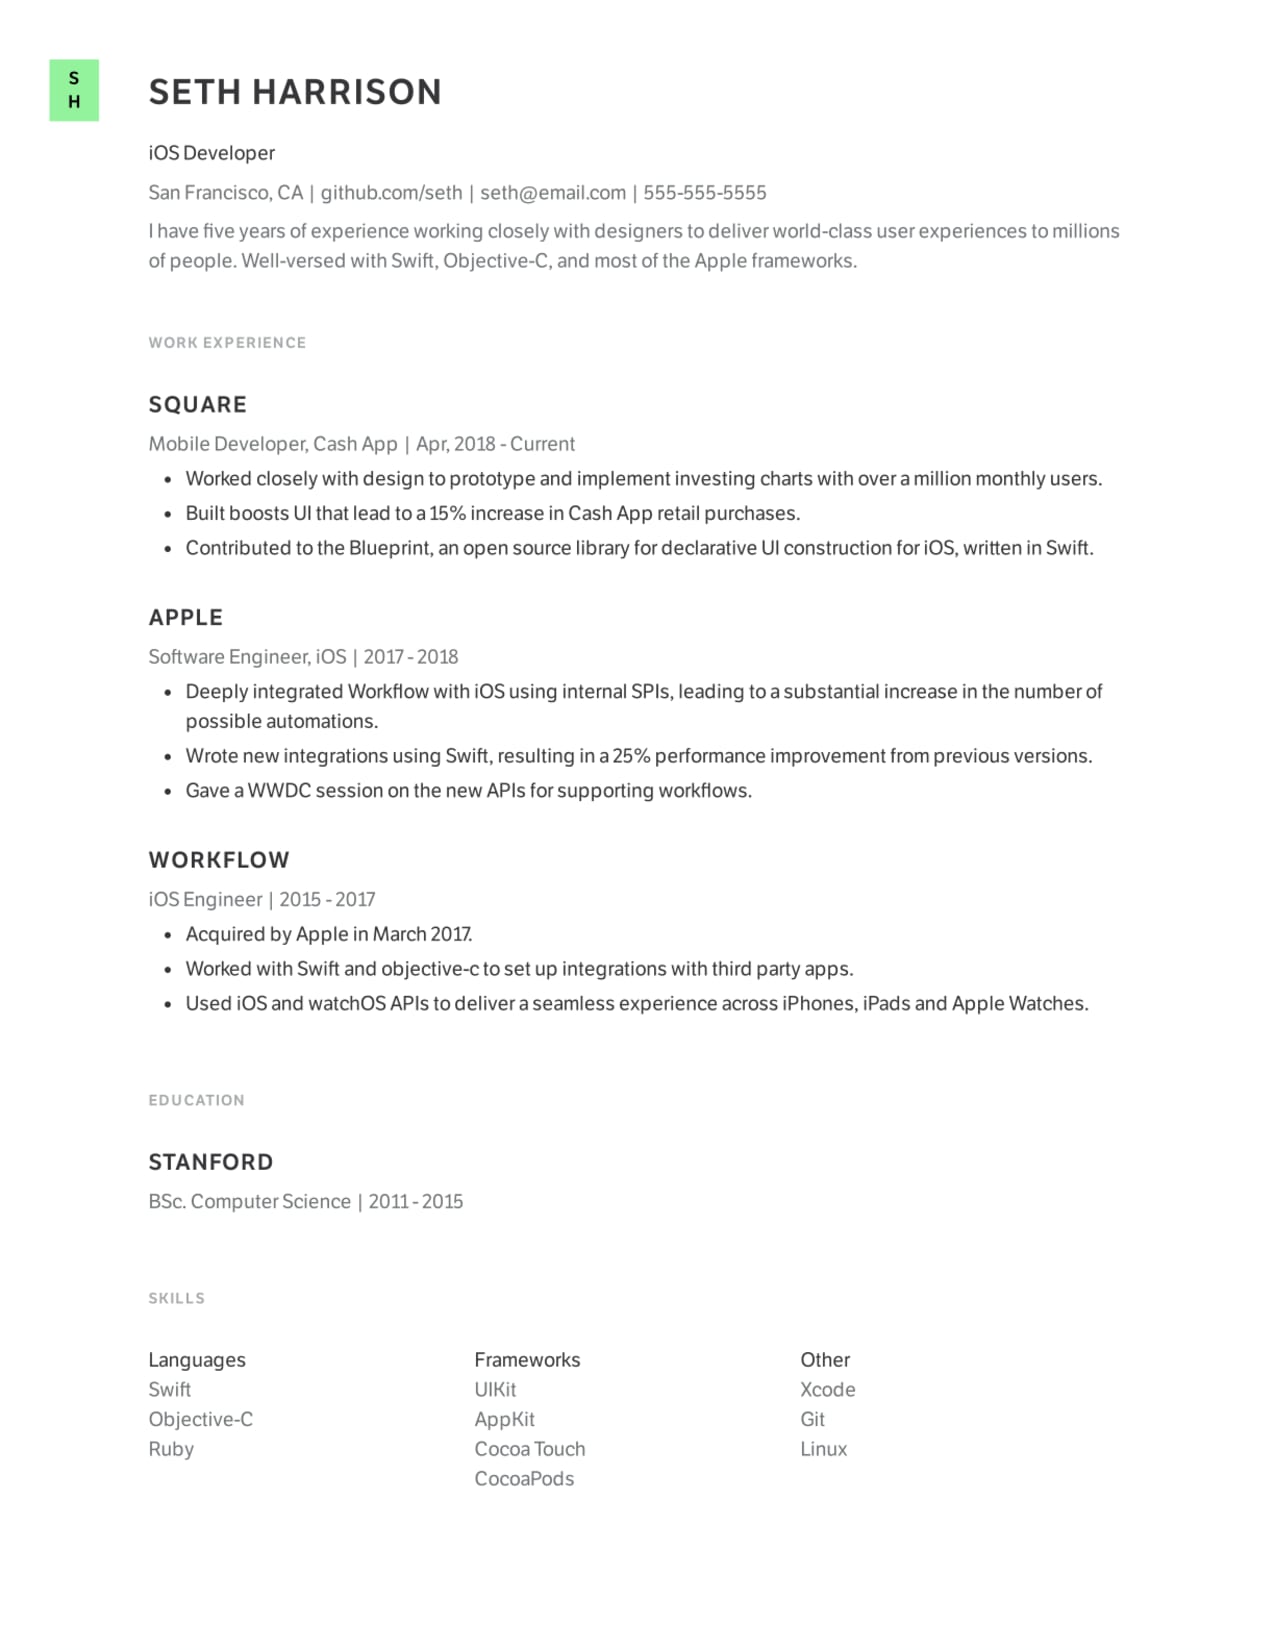 Professional iOS Developer resume template example.